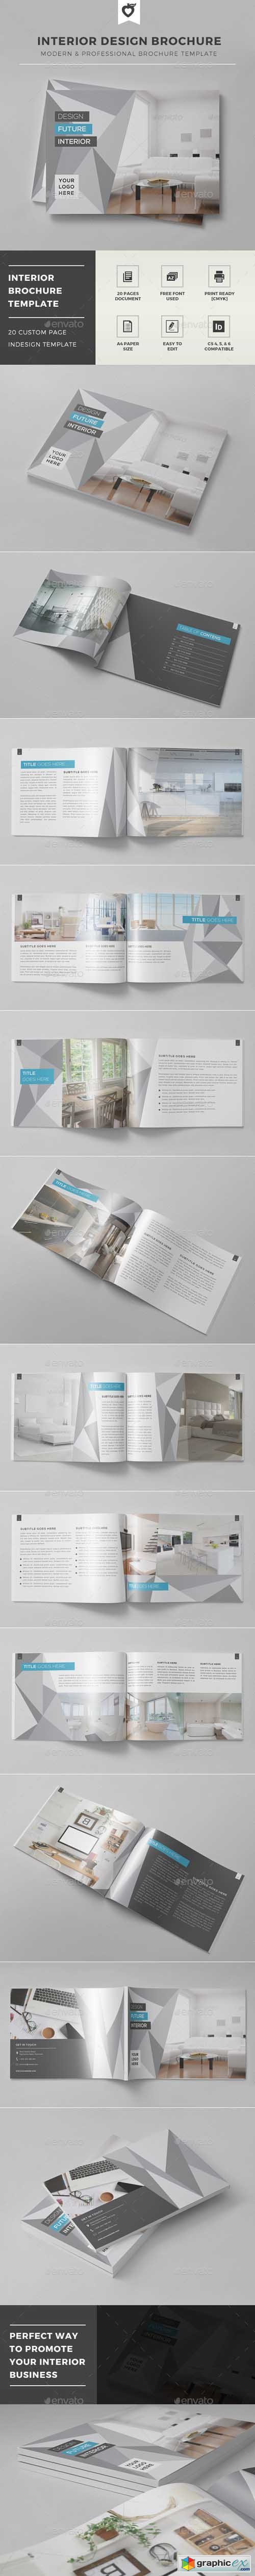 Interior Design Brochure Template 12474610